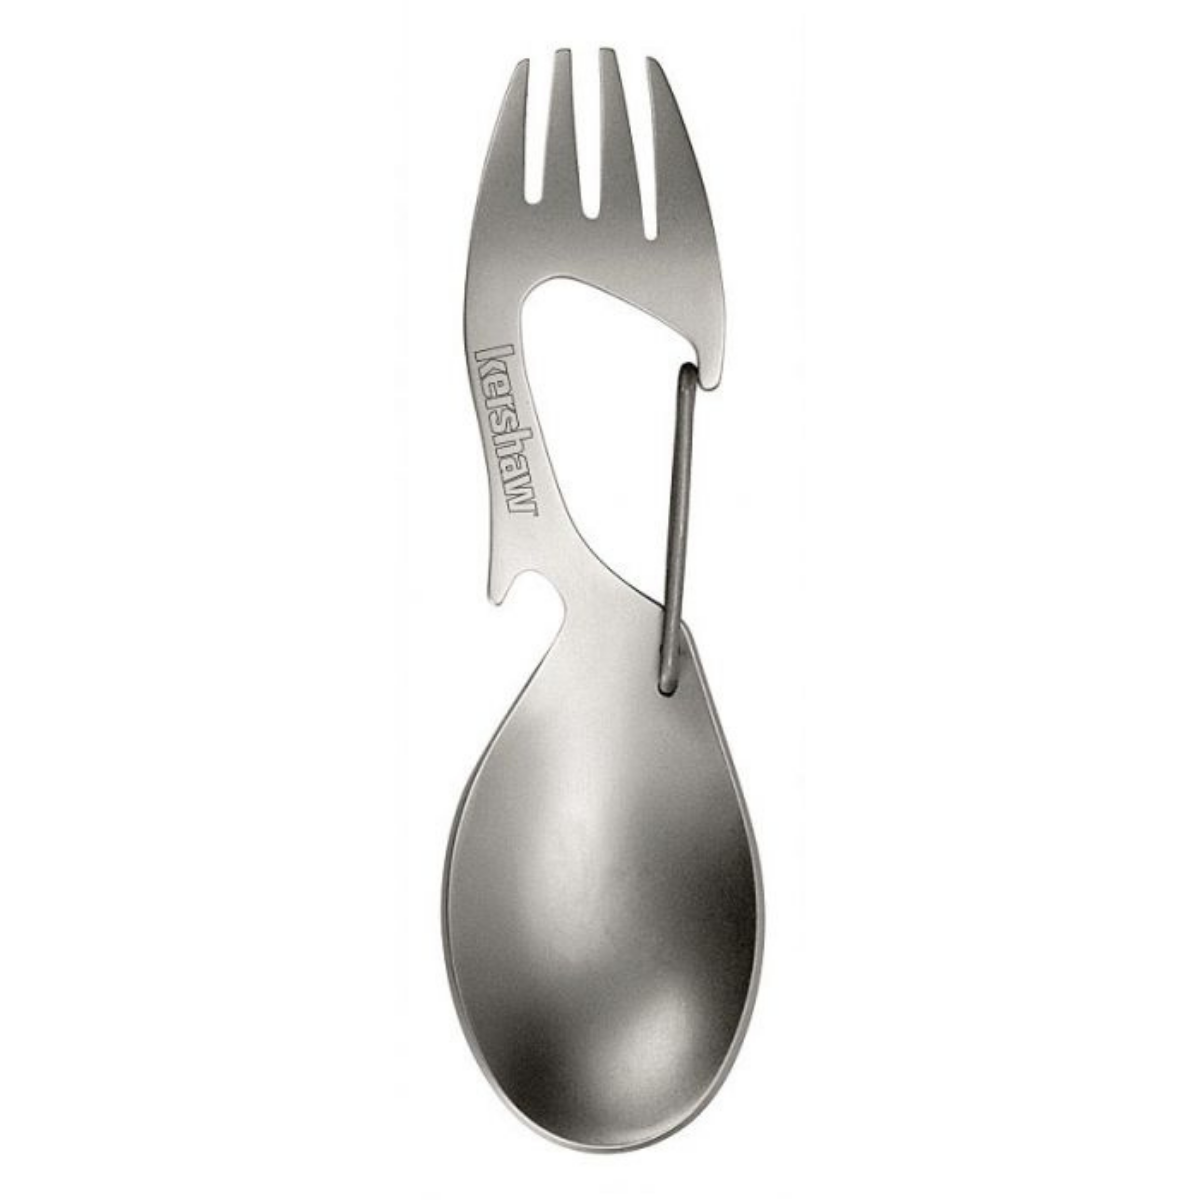 Kershaw Ration Spoon & Fork Combo Tool